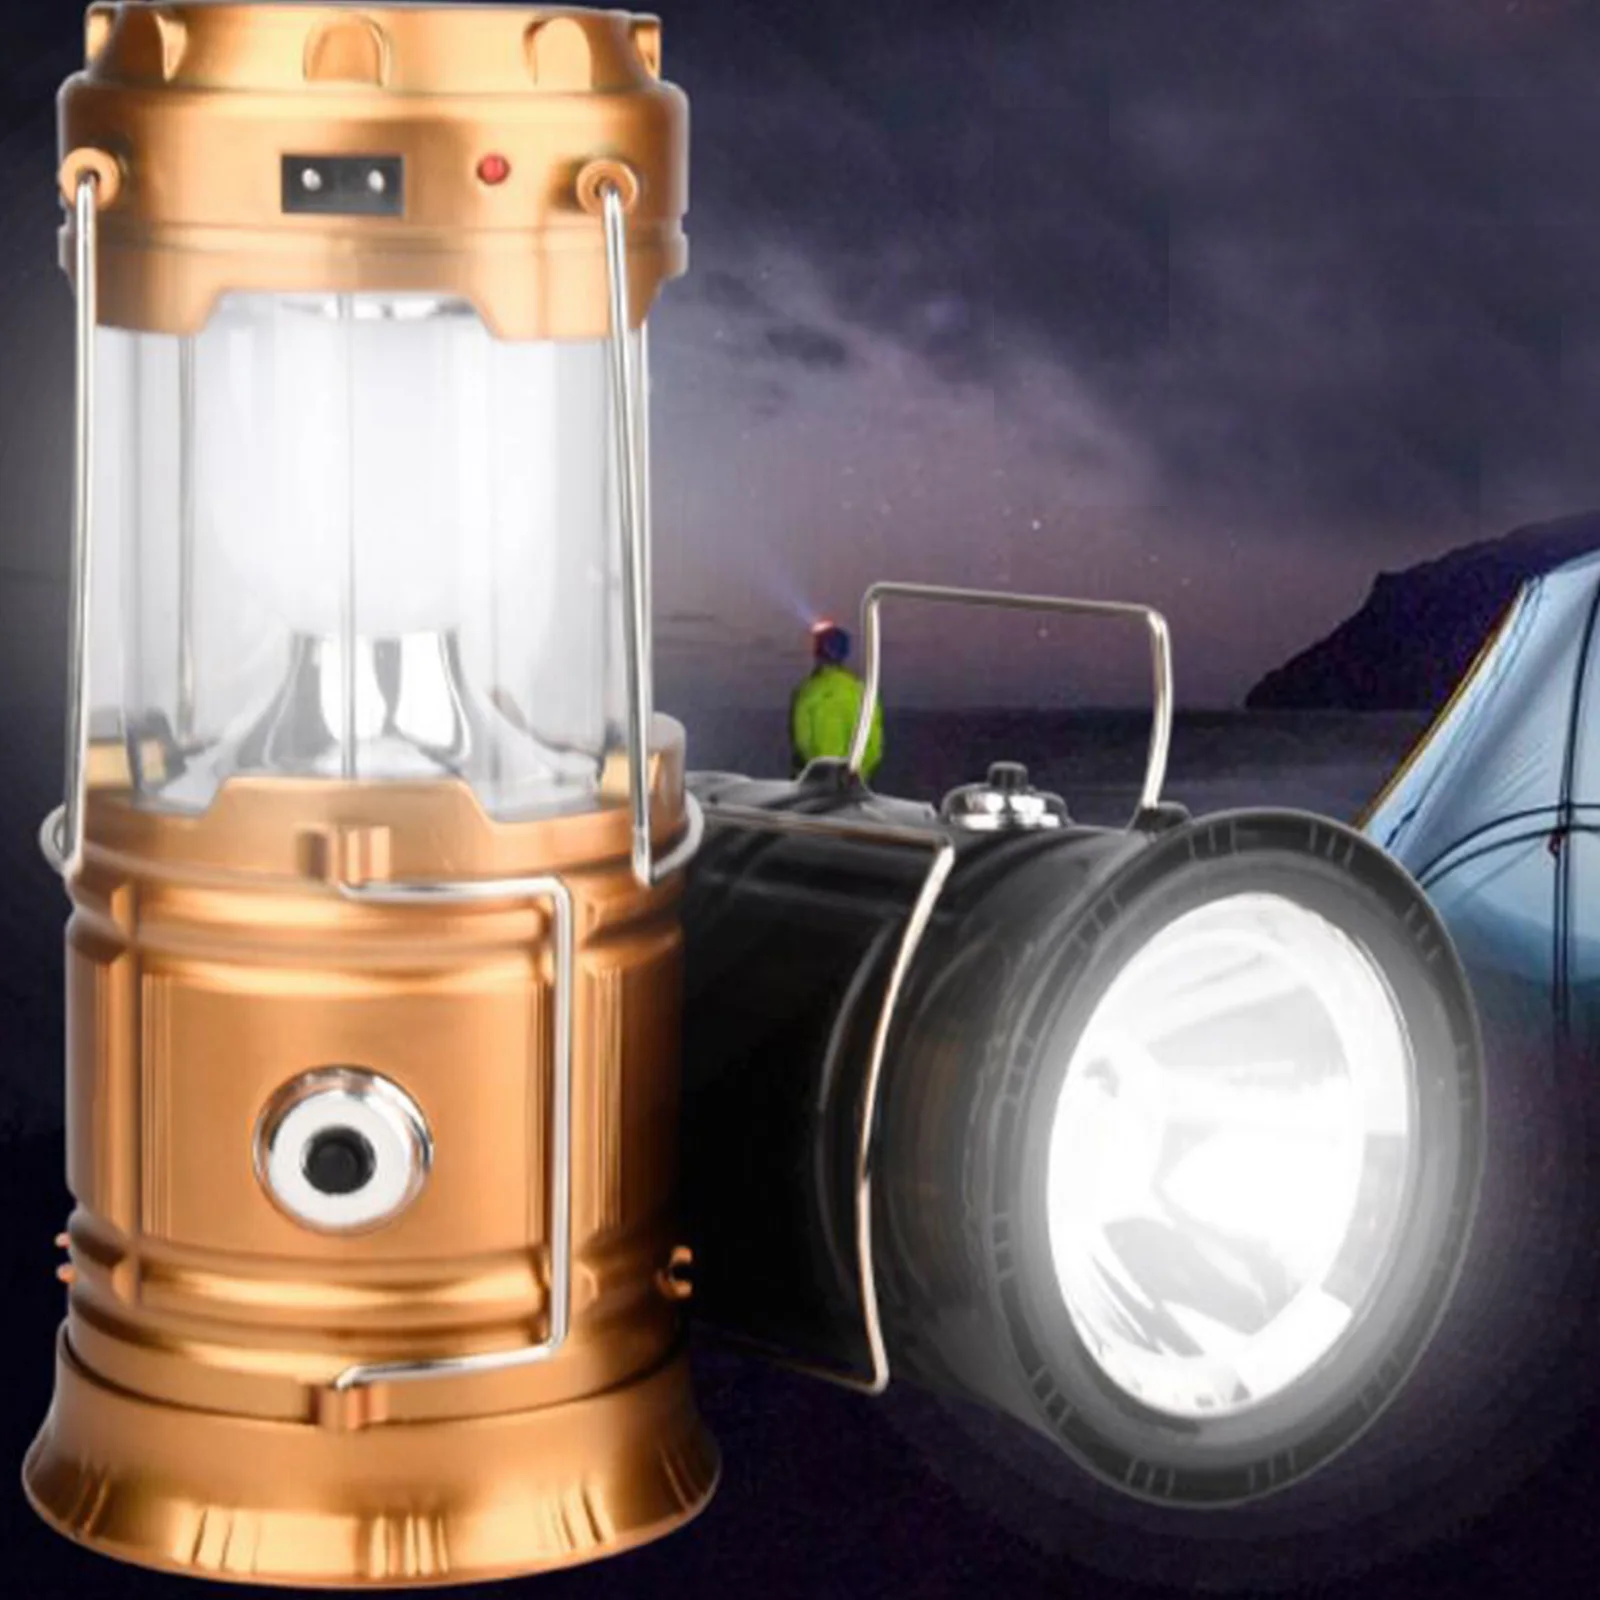 https://ae01.alicdn.com/kf/S821e420269174217a88f58b8b97d19f80/Solar-Tent-Lamp-LED-Portable-Flashlight-Multifunctional-Handheld-Camping-Lamp-Portable-Waterproof-Emergency-Powered-Work-Light.jpg